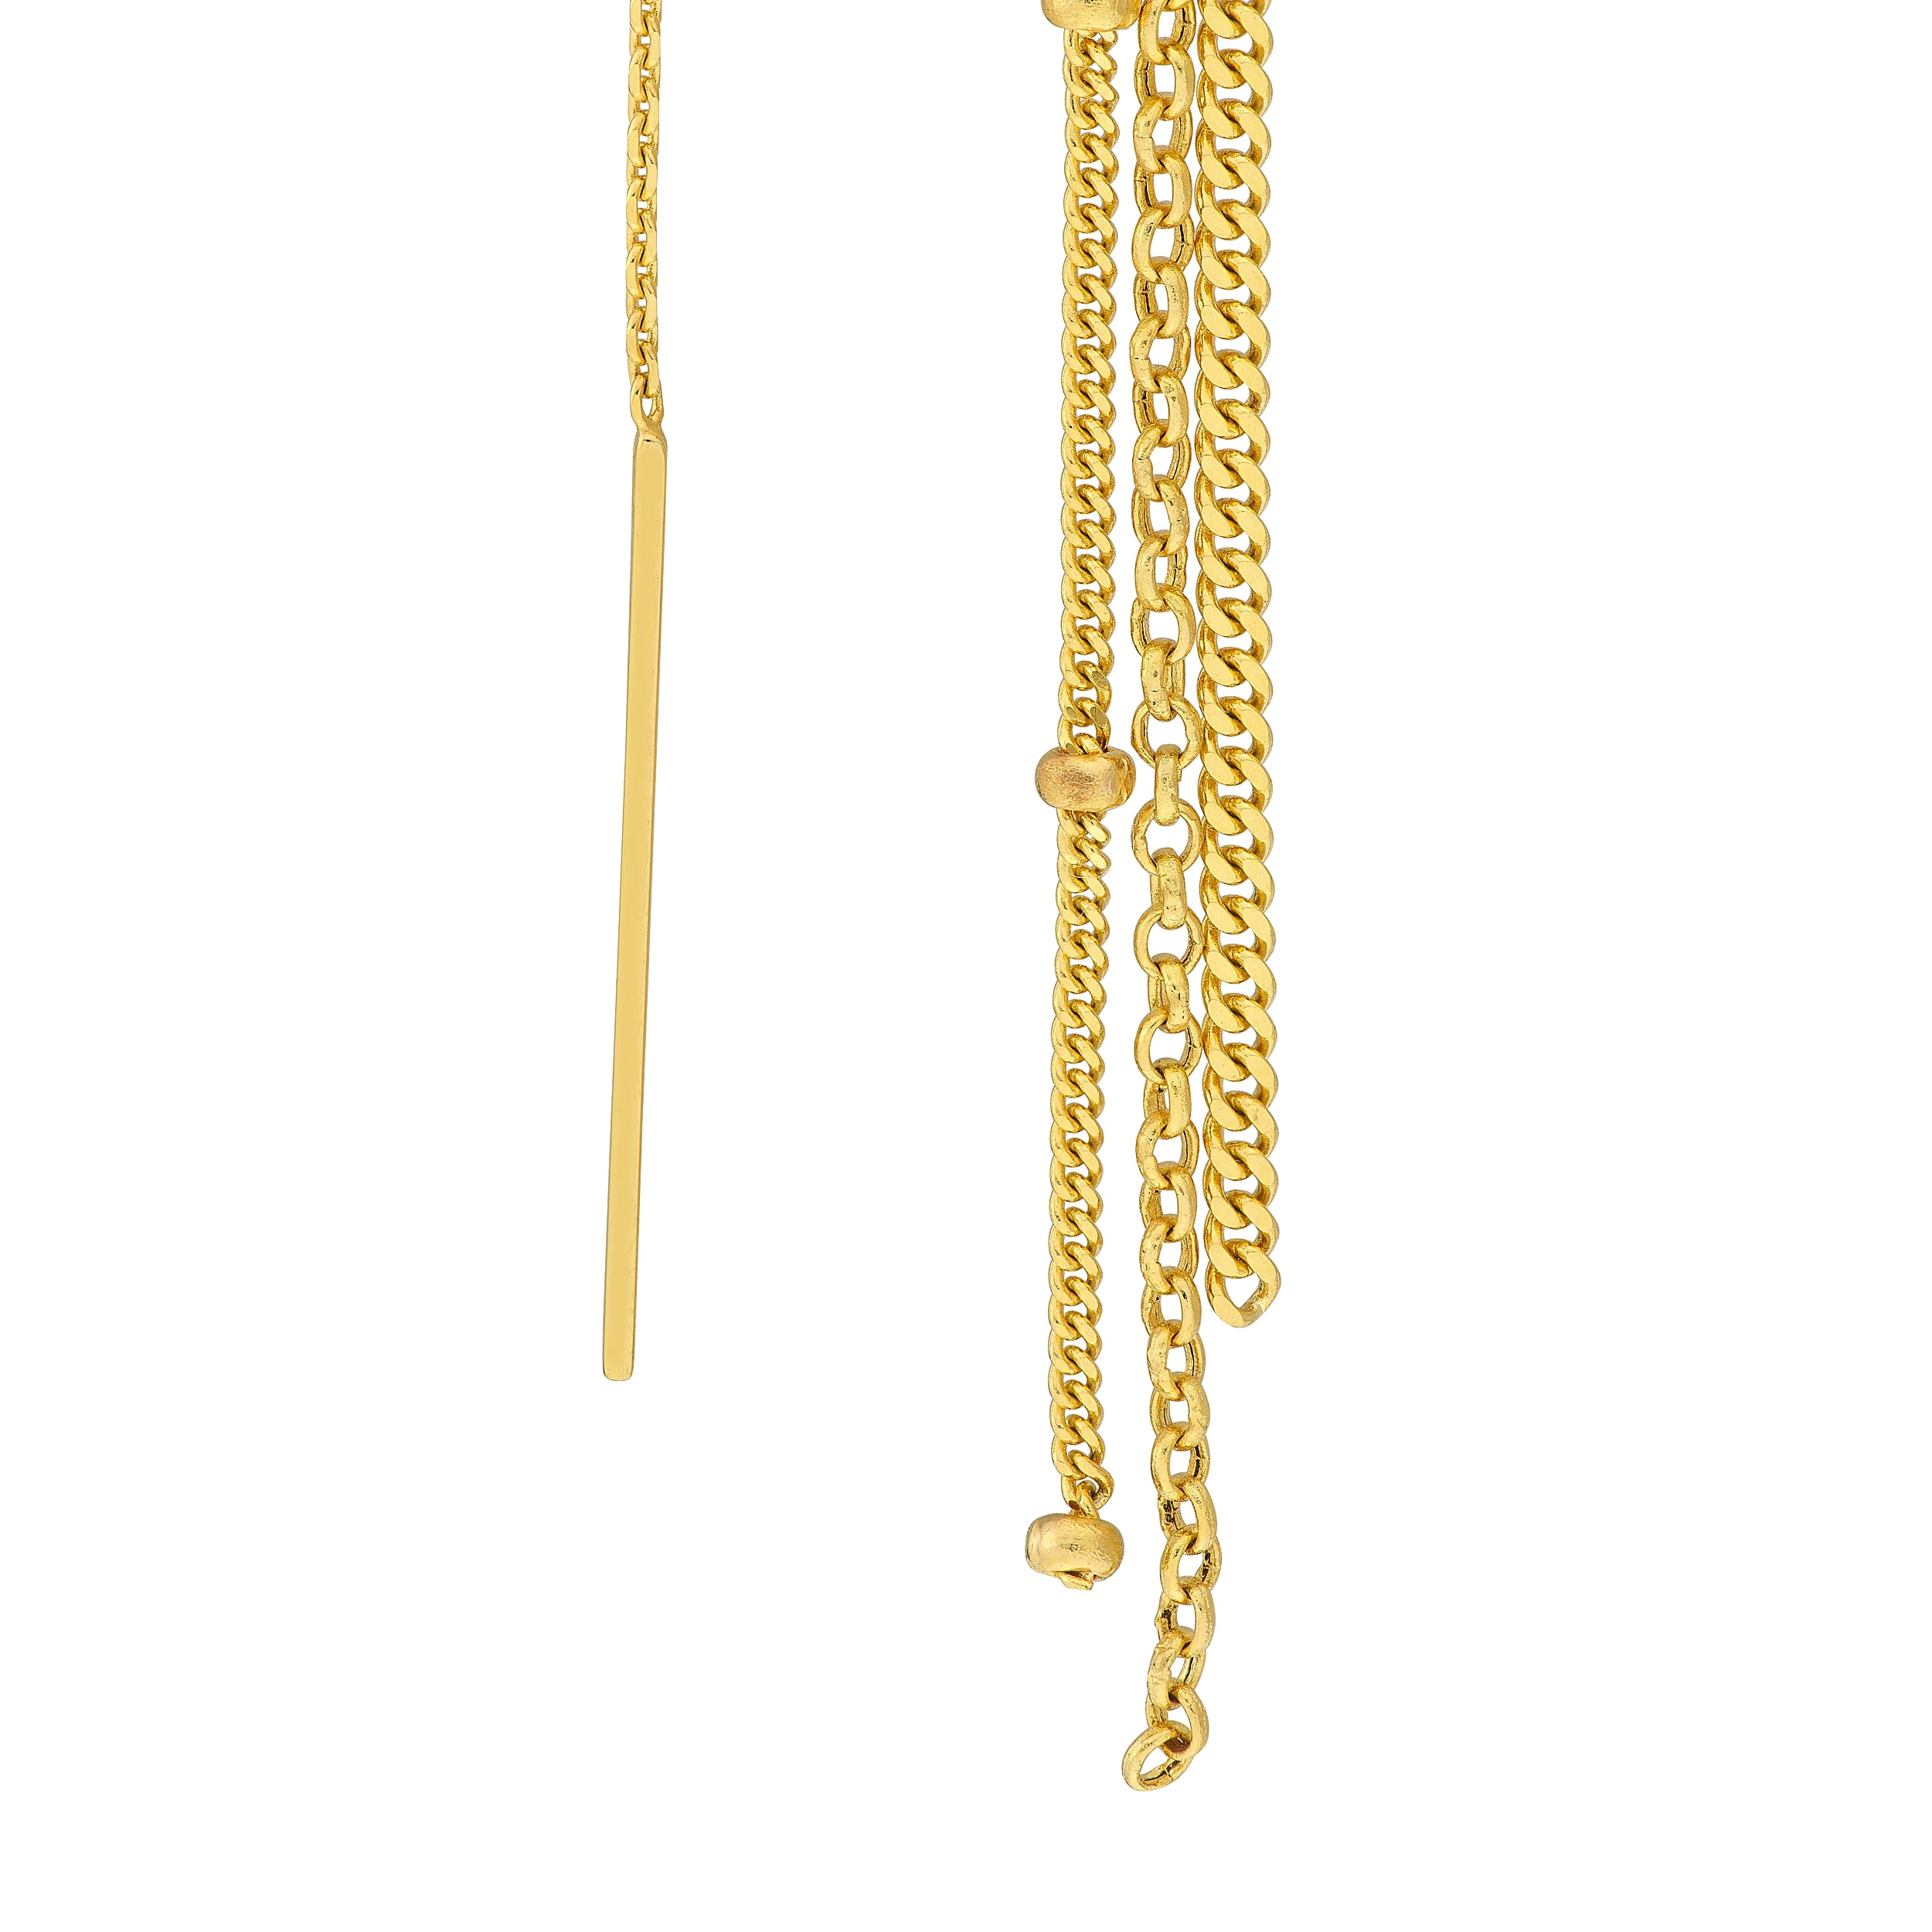 Inline Threader | Earrings from Melanie Casey 14K Yellow Gold